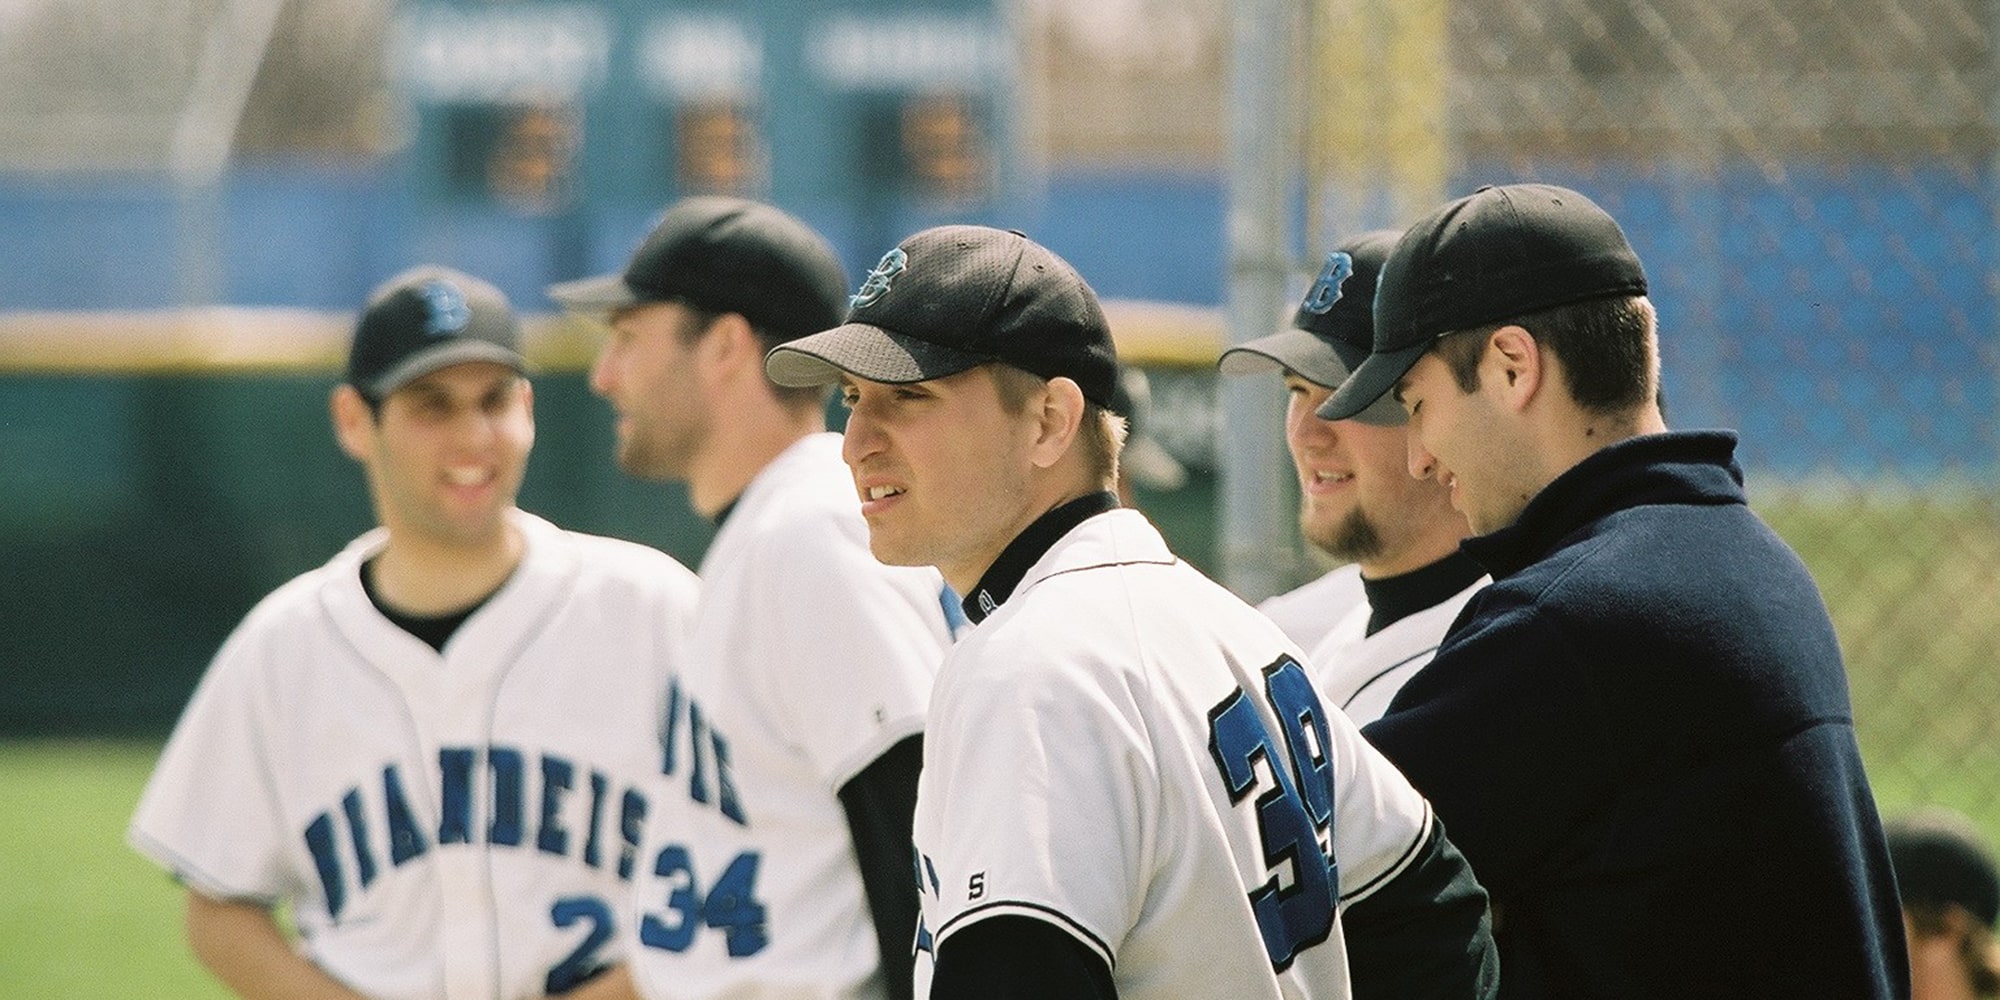 Josh Center with his baseball team at Brandeis University